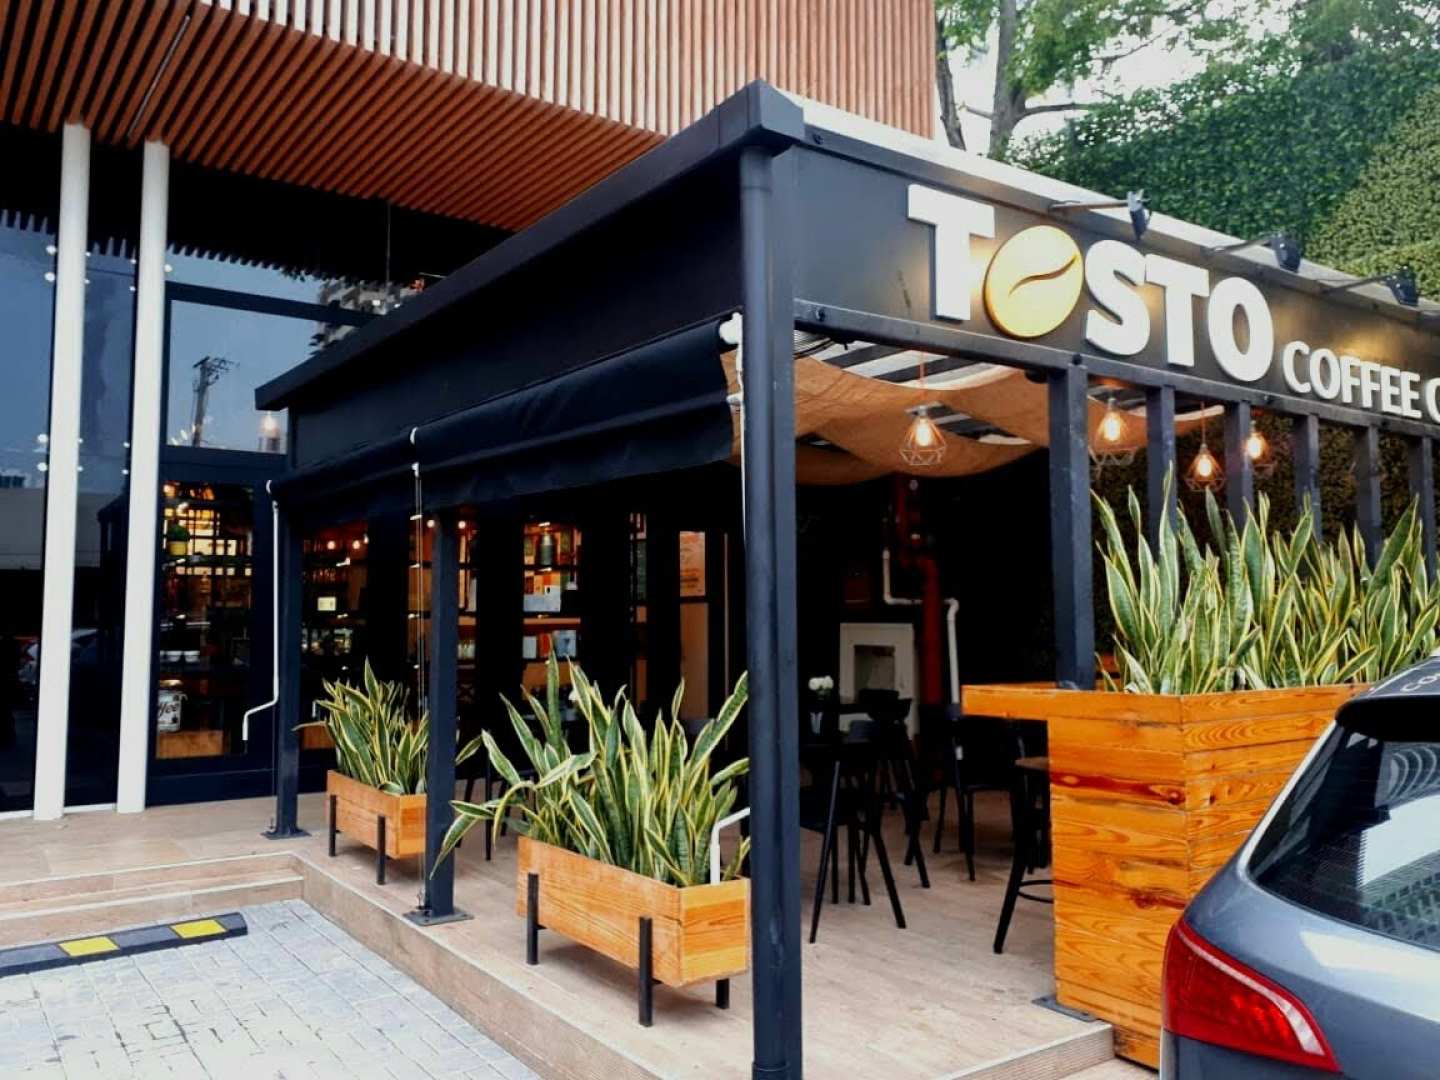 Tosto Coffee Co (San Francisco)